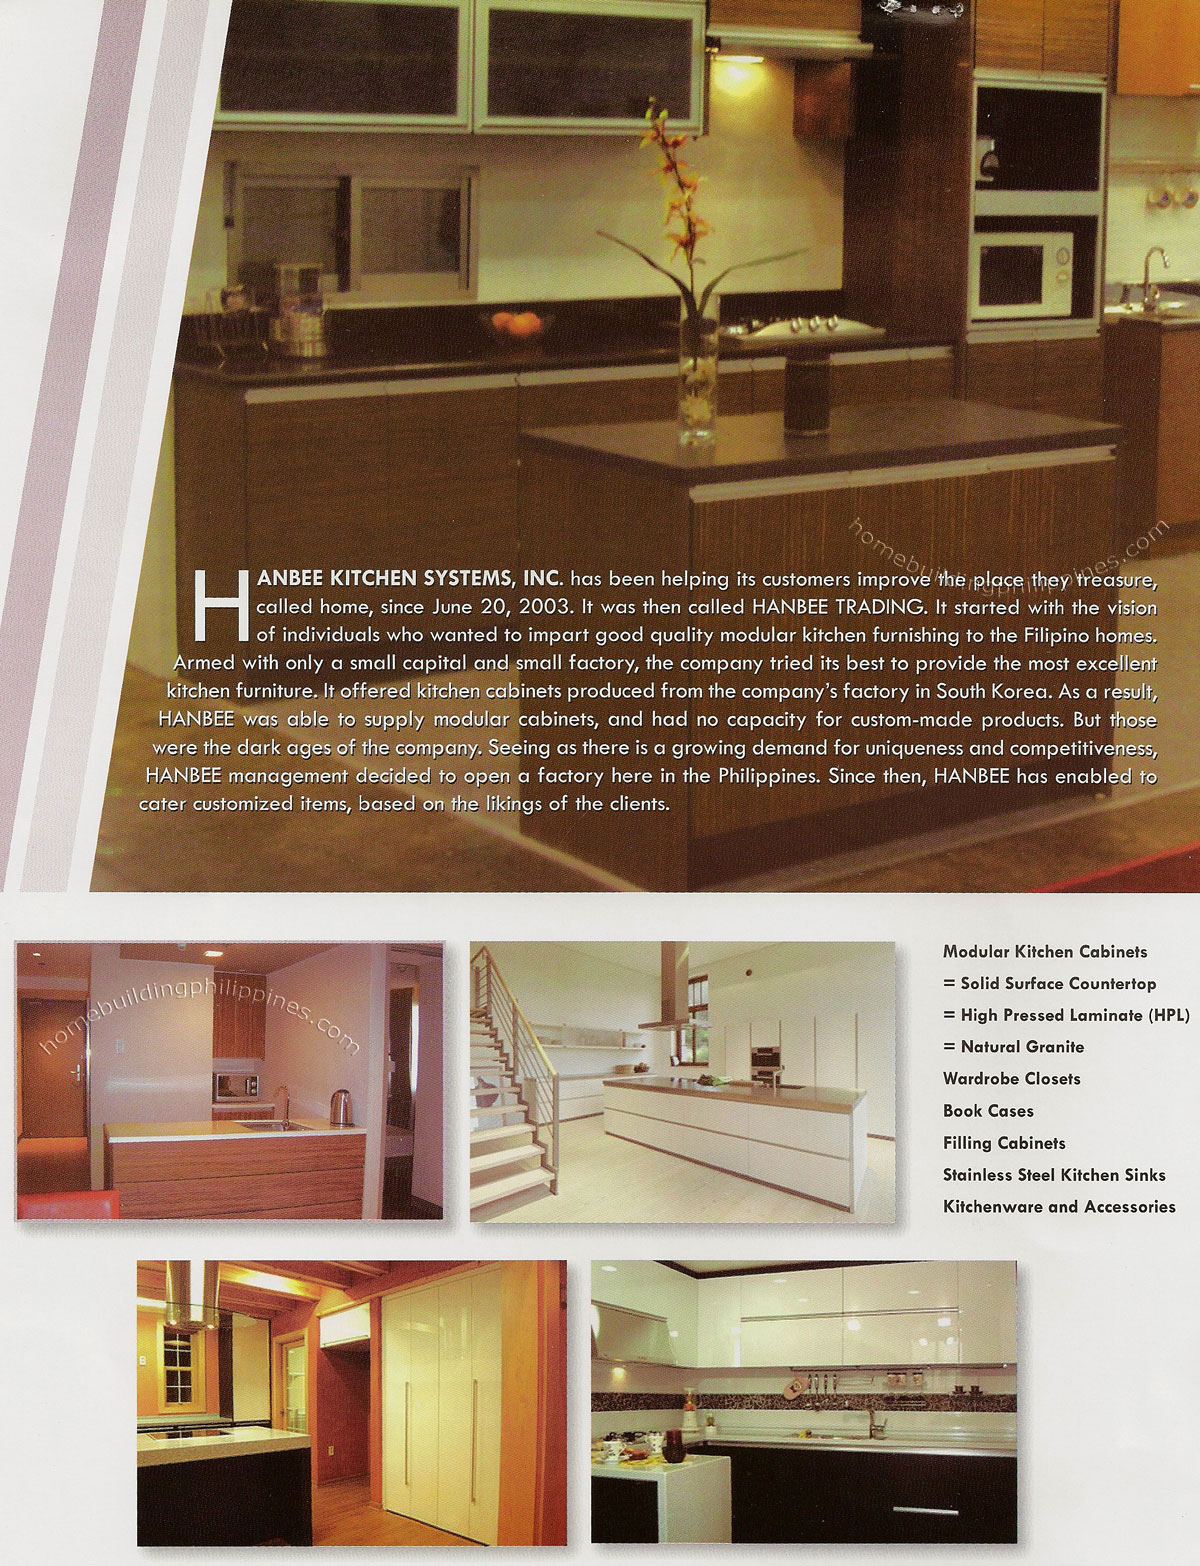 Modular Kitchen Cabinets, Solid Surface, Countertop, High Pressed Laminate, Natural Granite